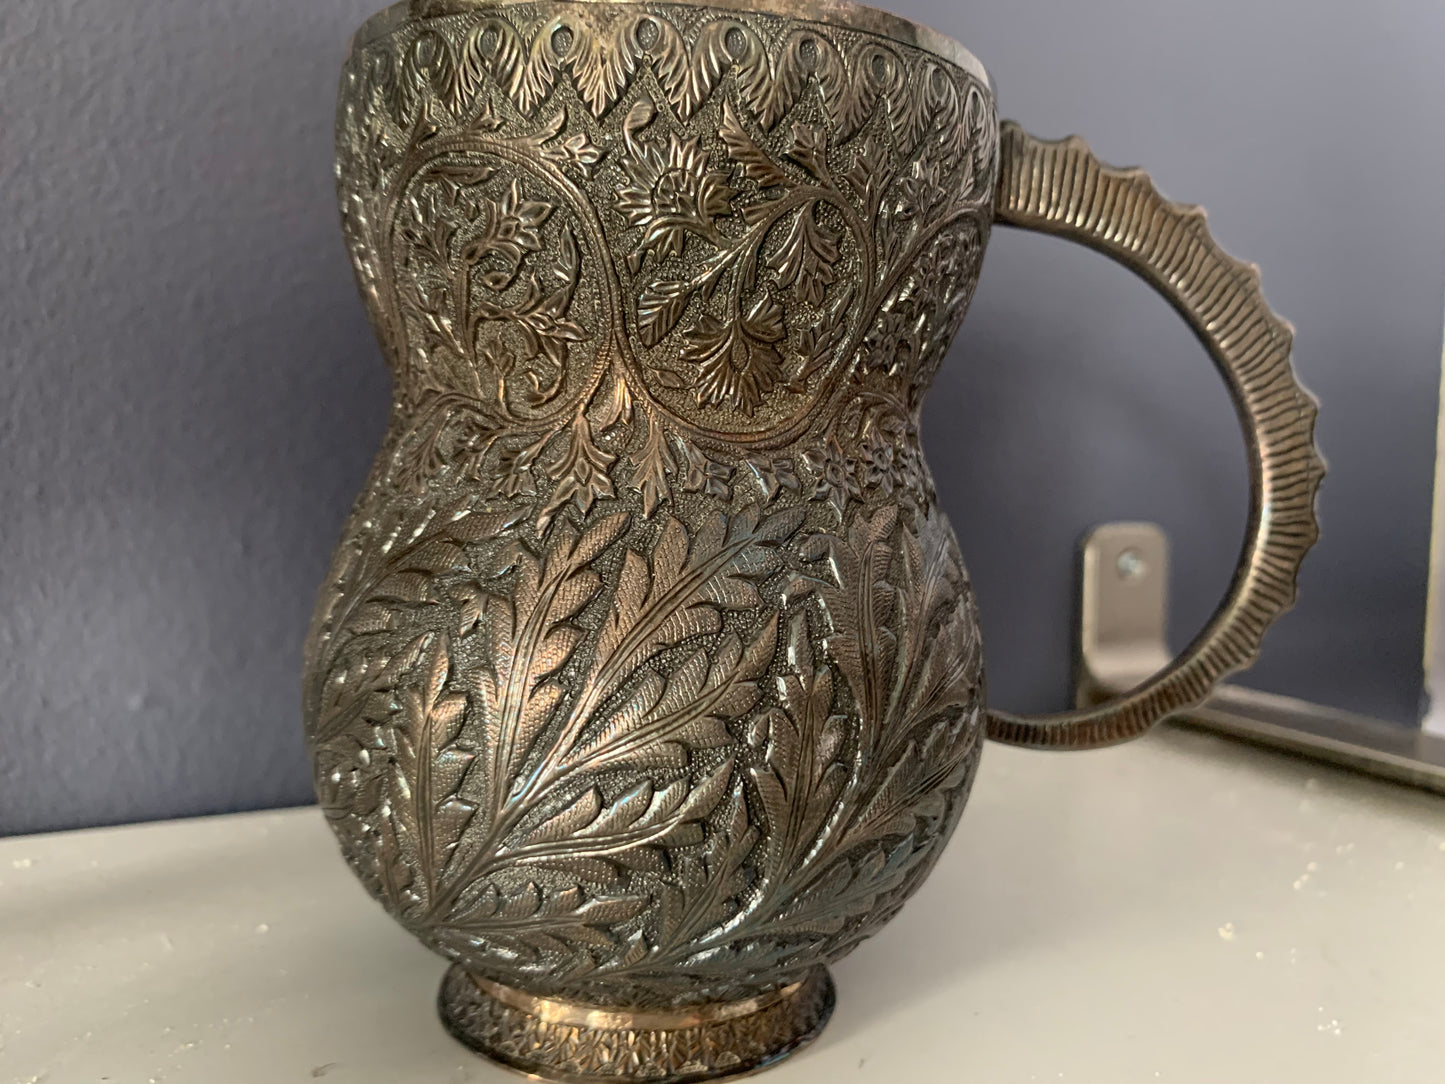 An intricately carved silver mug